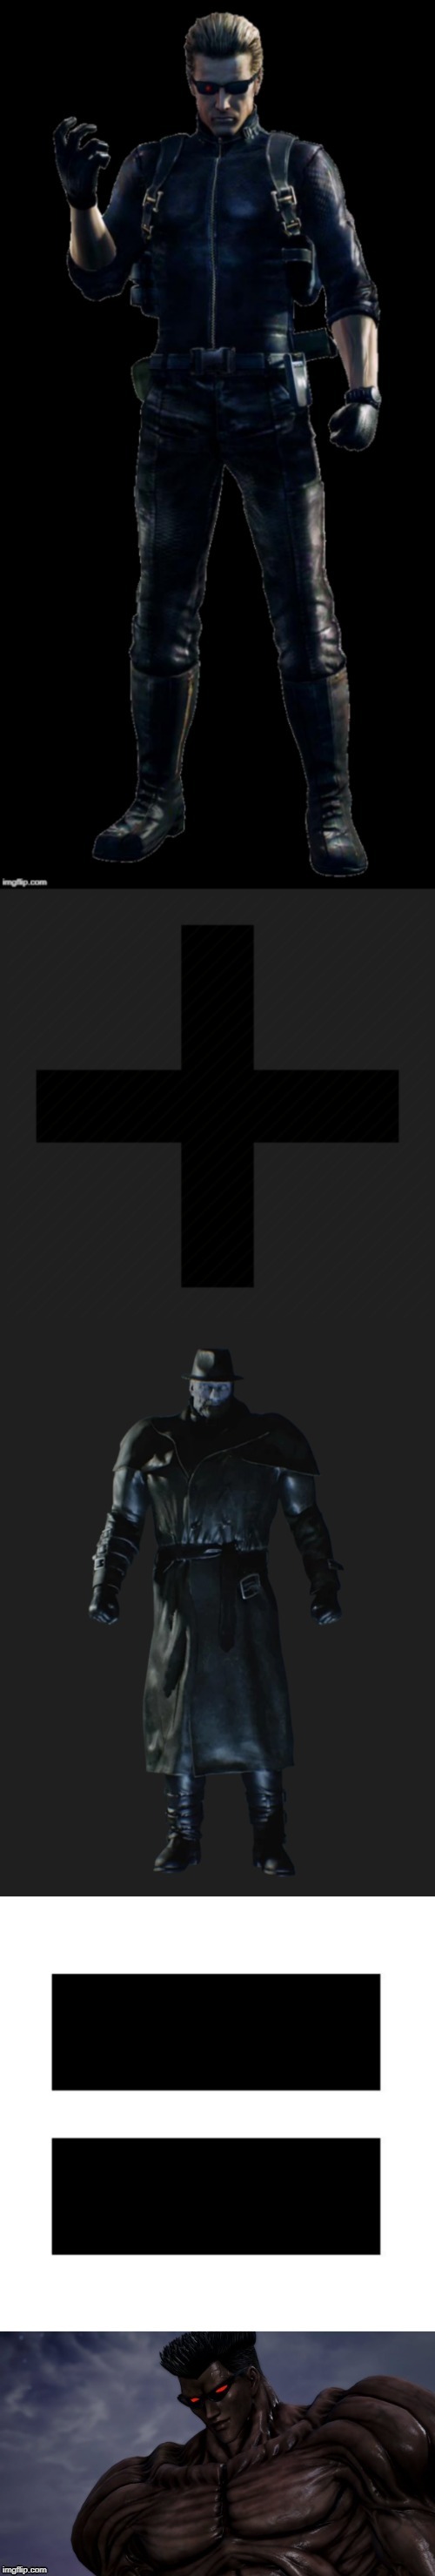 Albert Wesker plus Mr. X equals Toguro | image tagged in resident evil,anime,animeme,anime meme | made w/ Imgflip meme maker